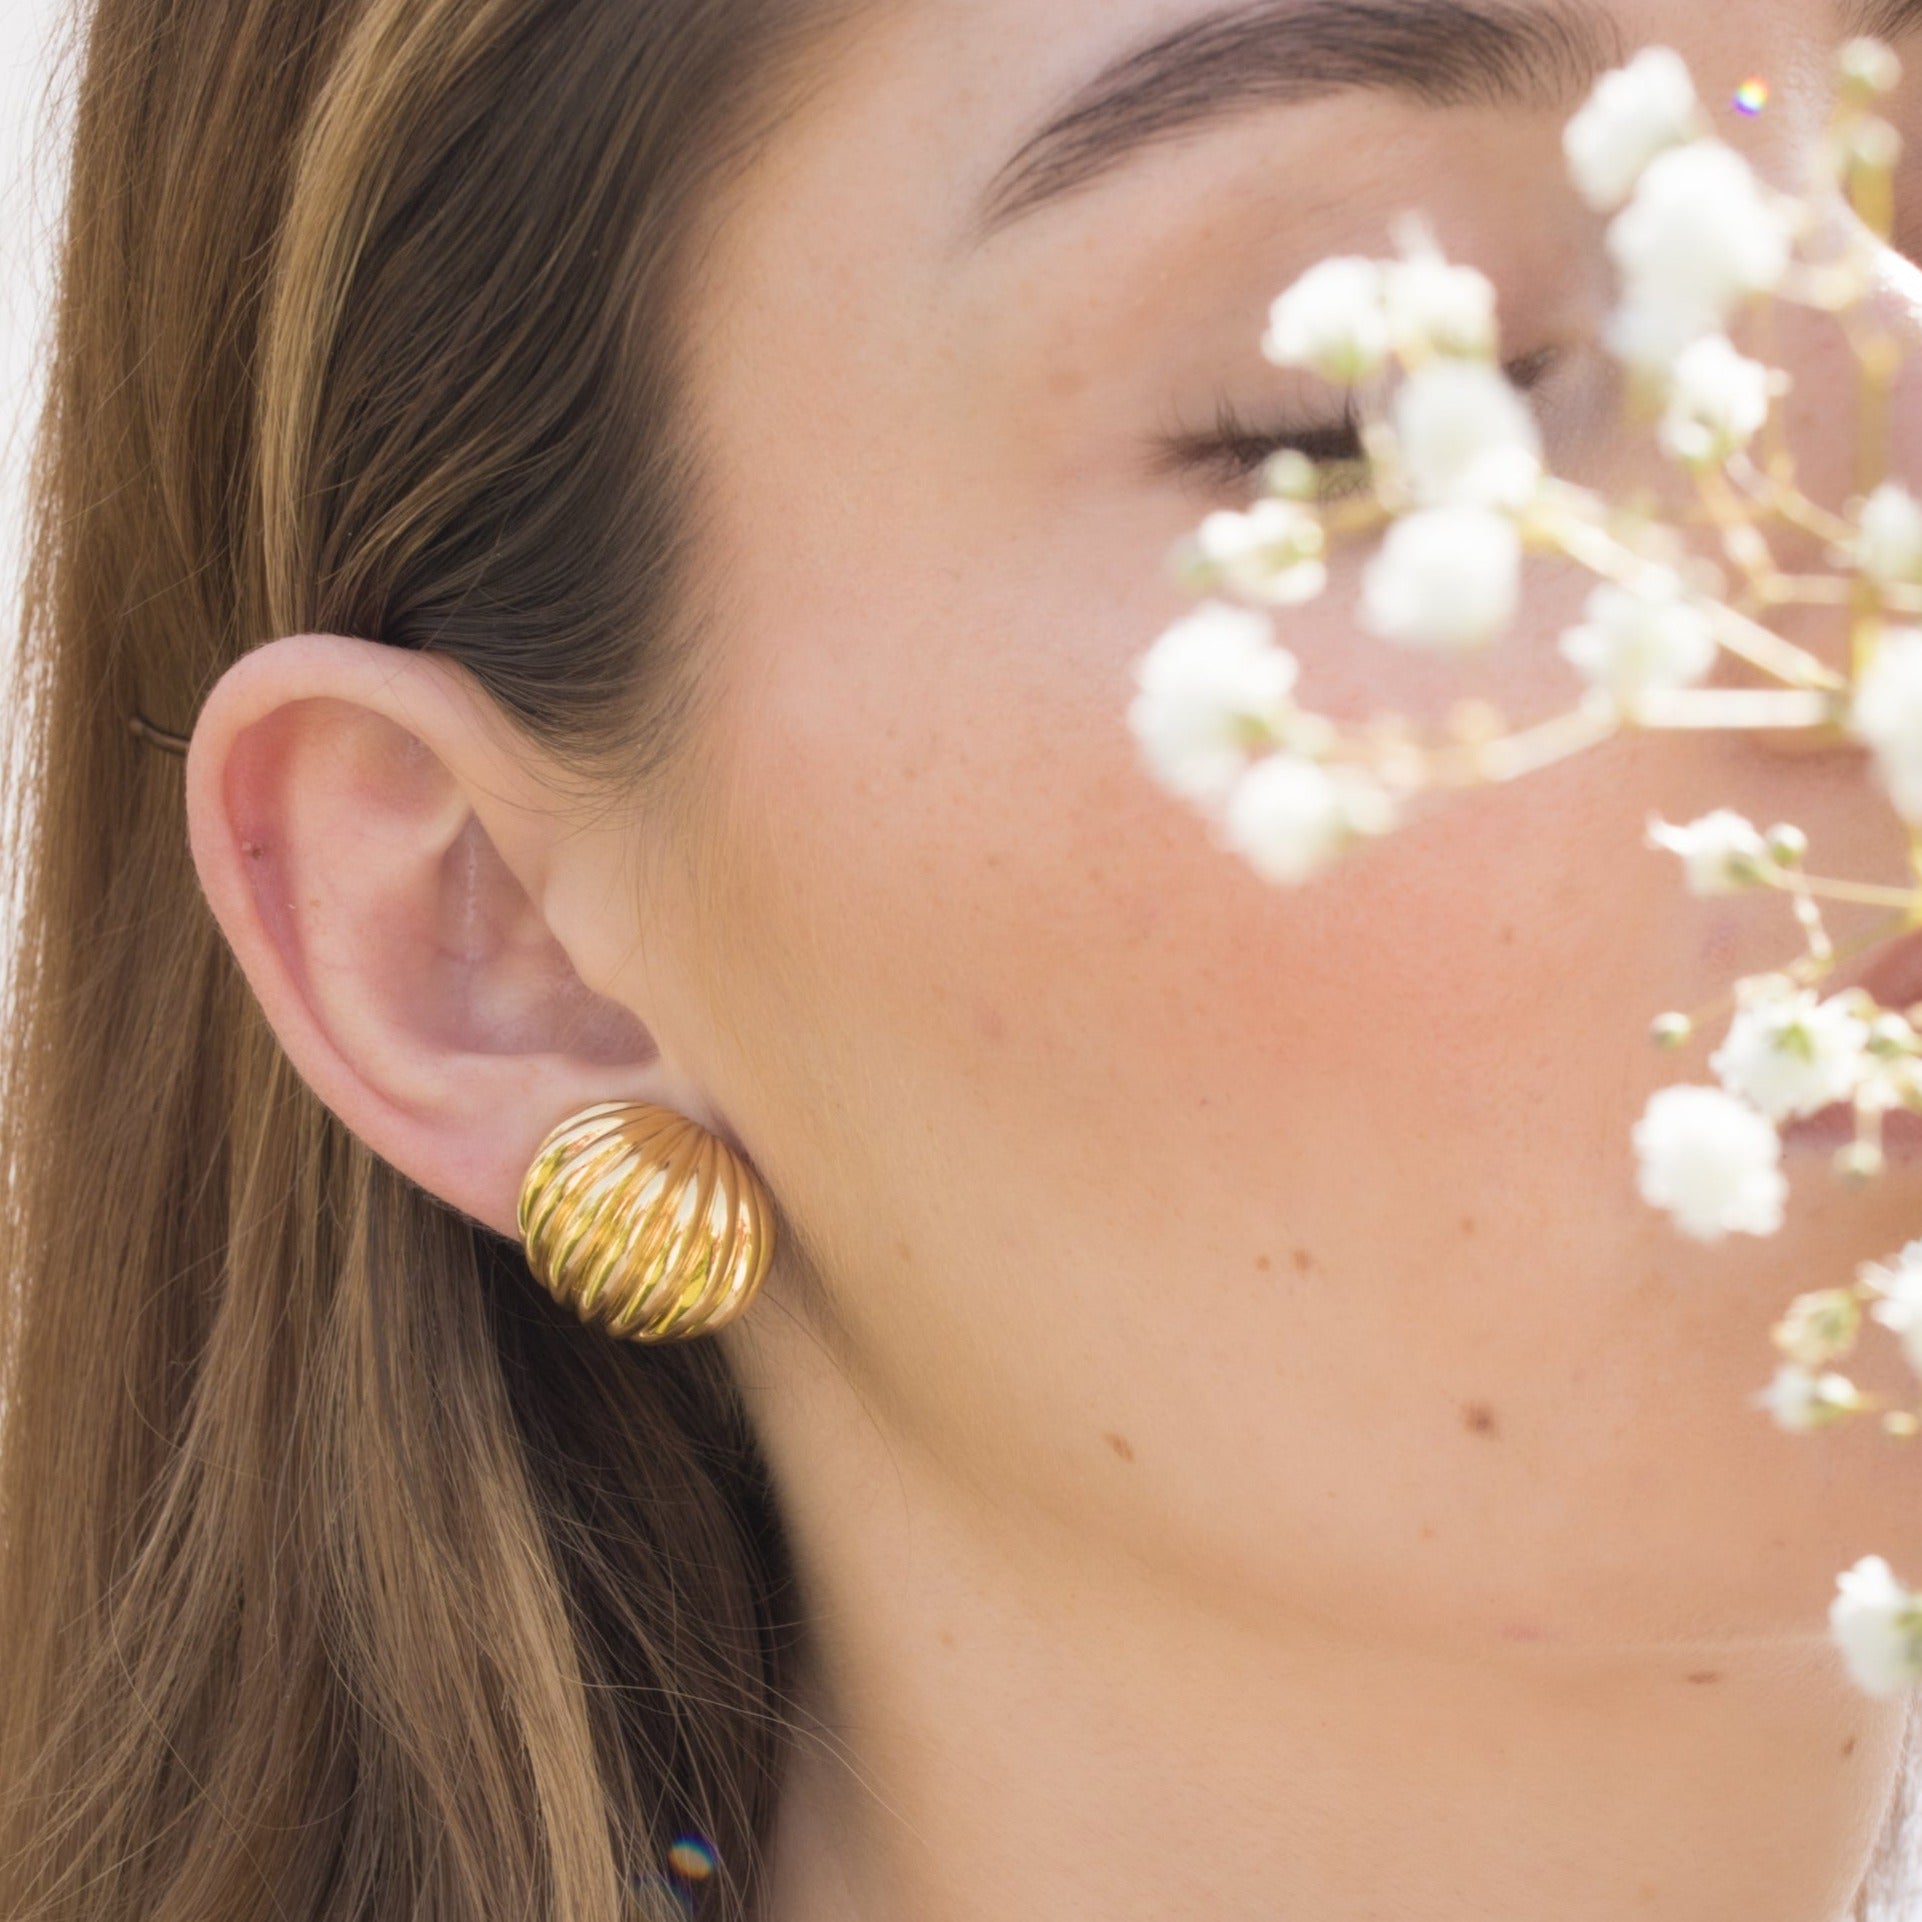 Woman in profile wearing a vintage gold earring.